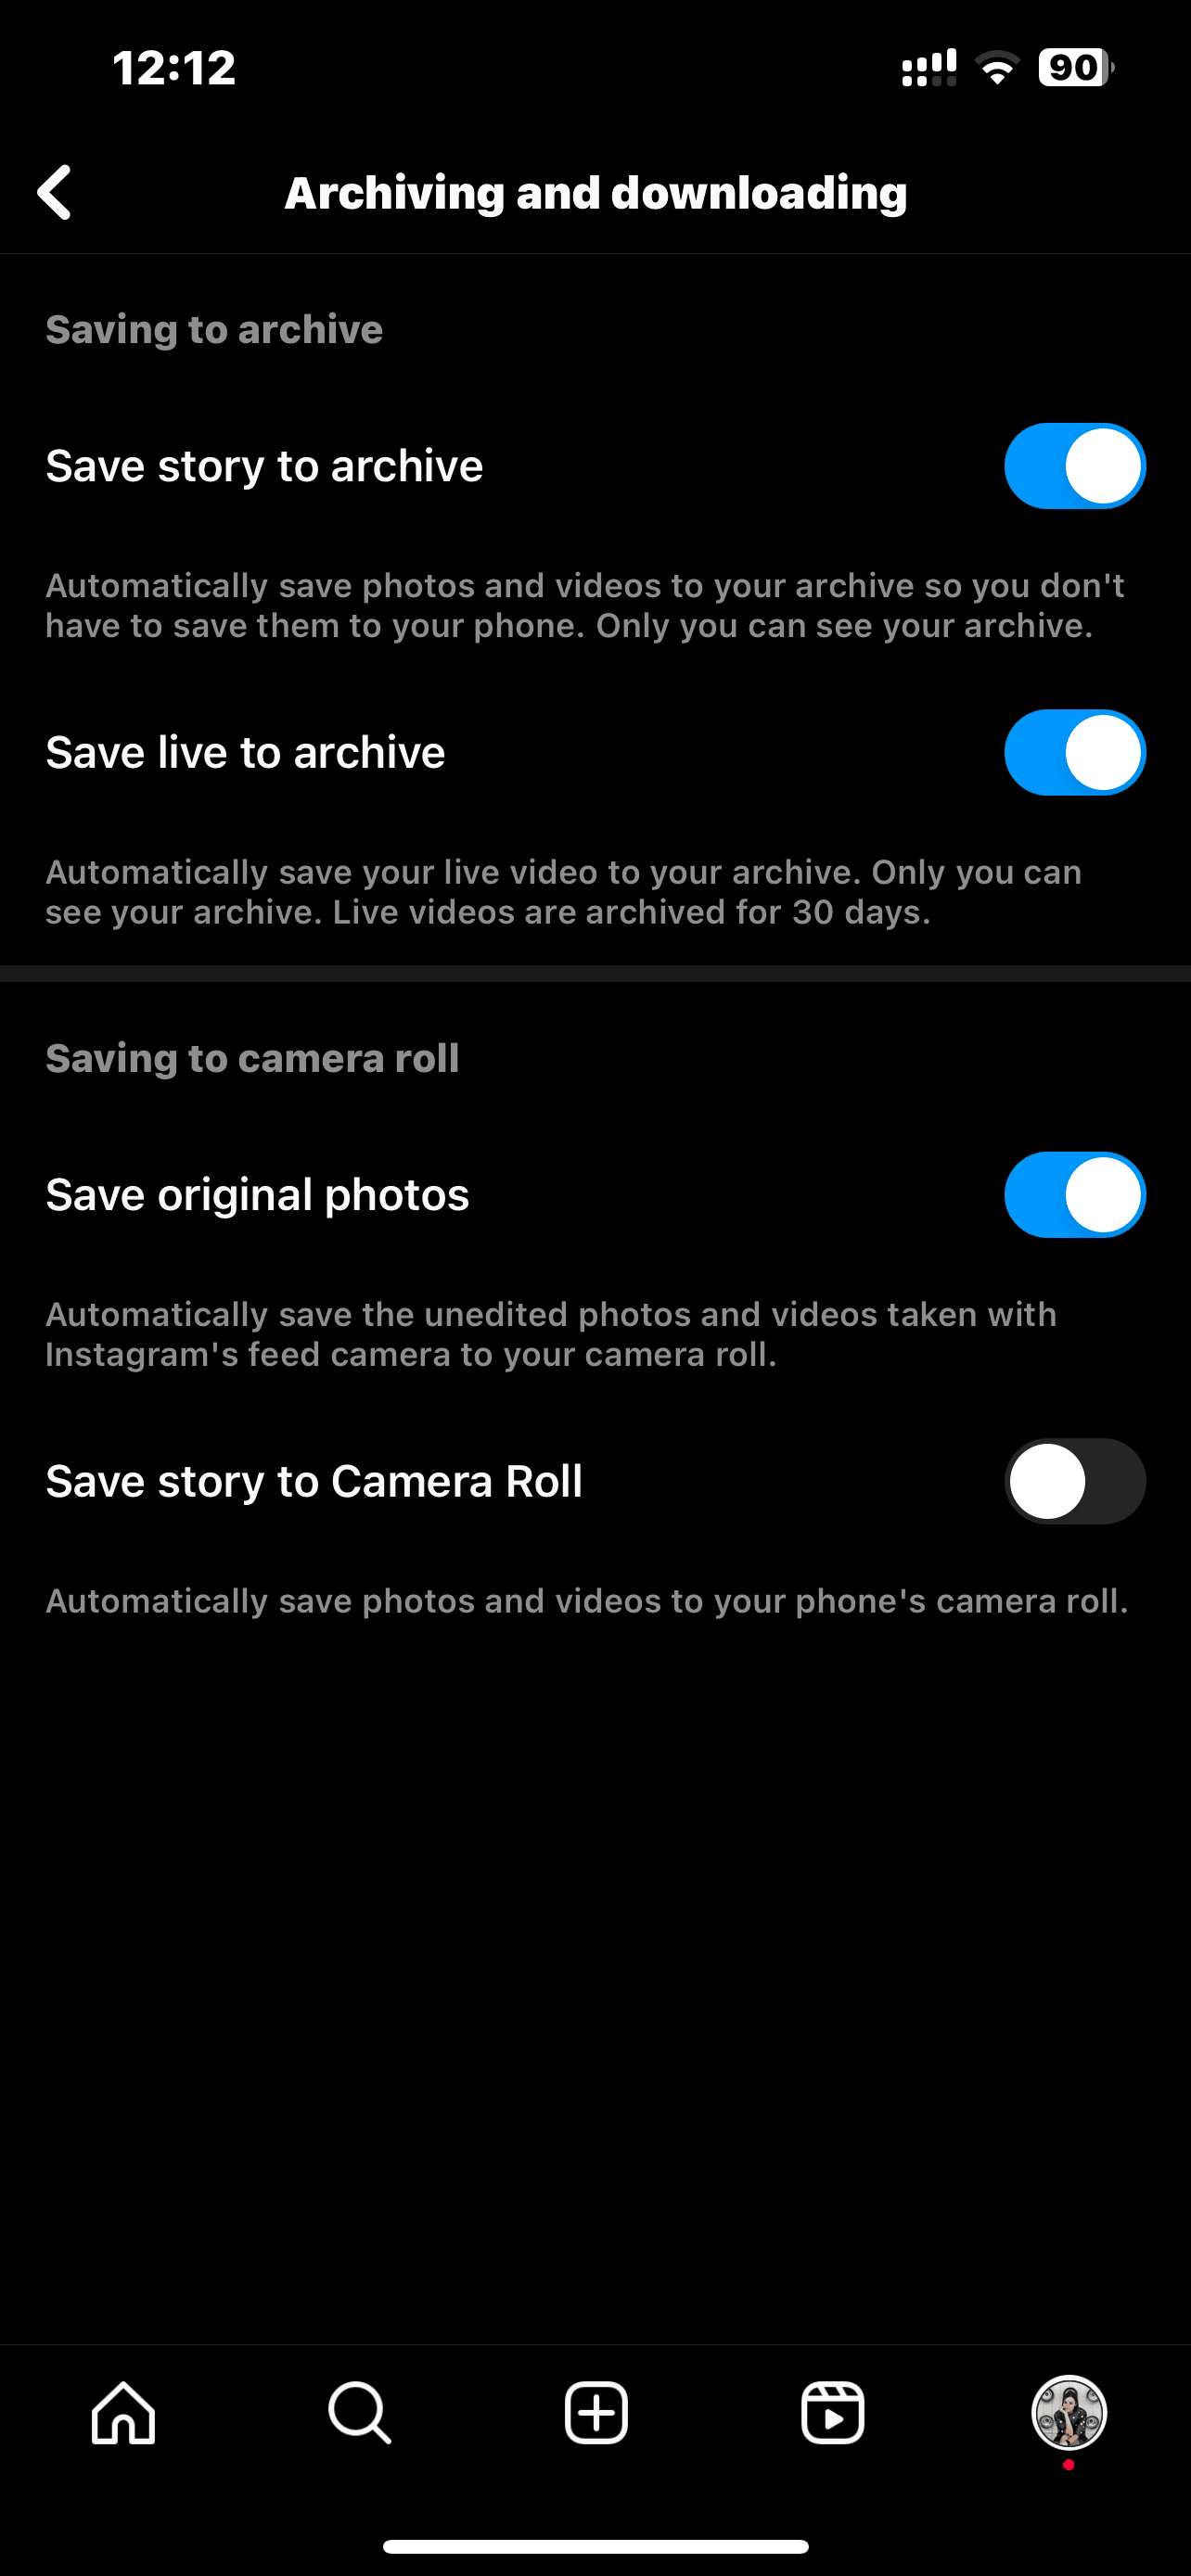 Instagram settings